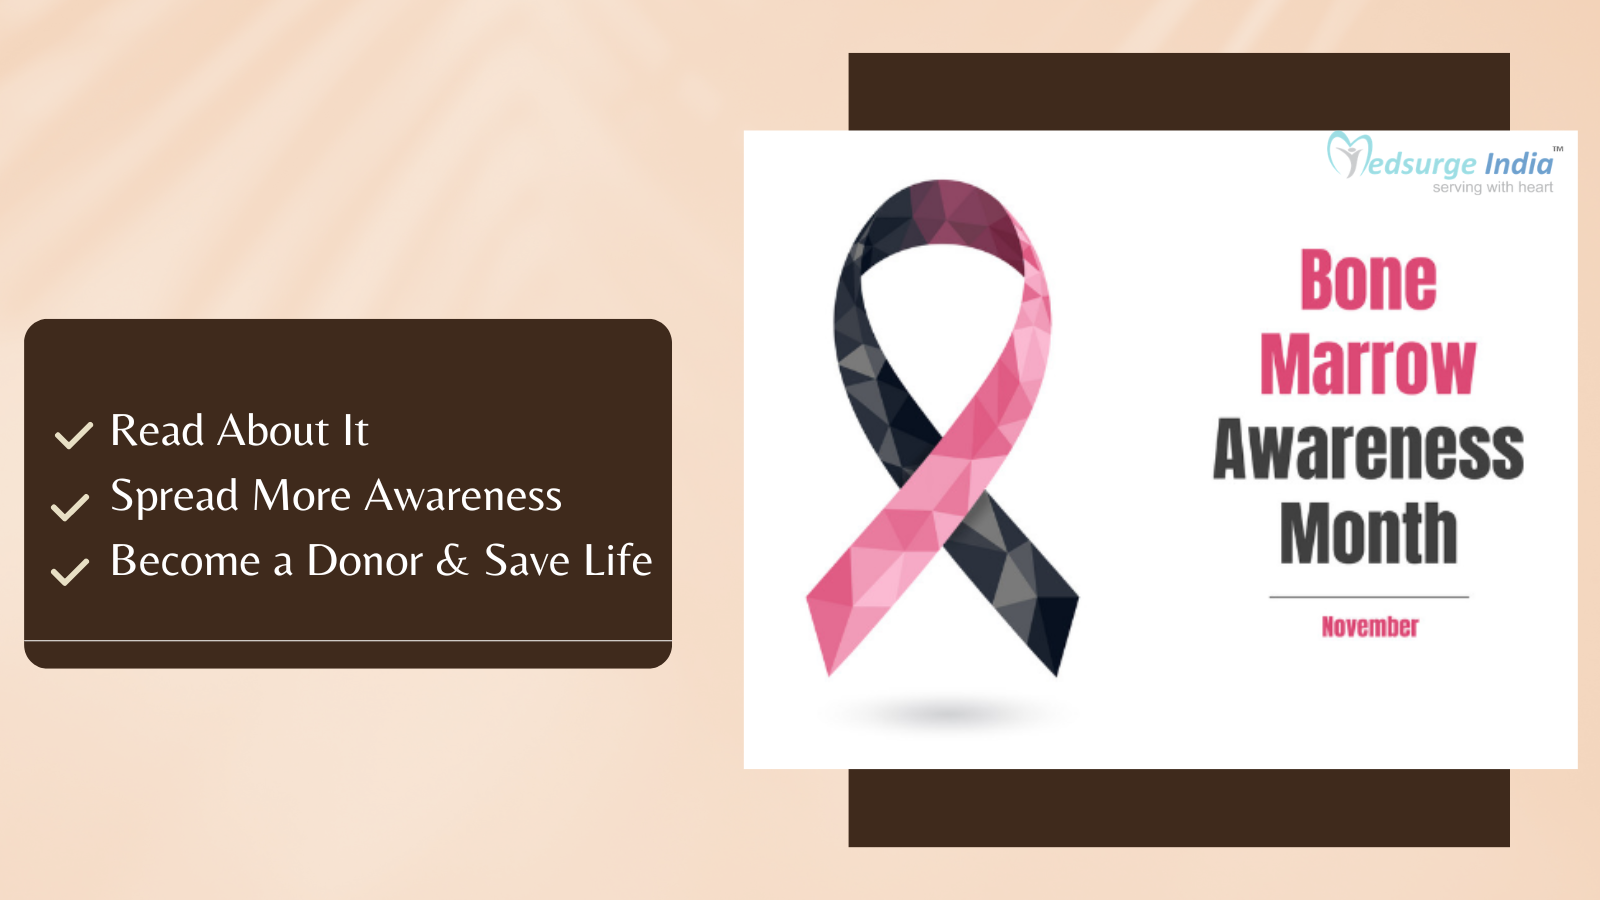 November is National Bone Marrow Awareness Month